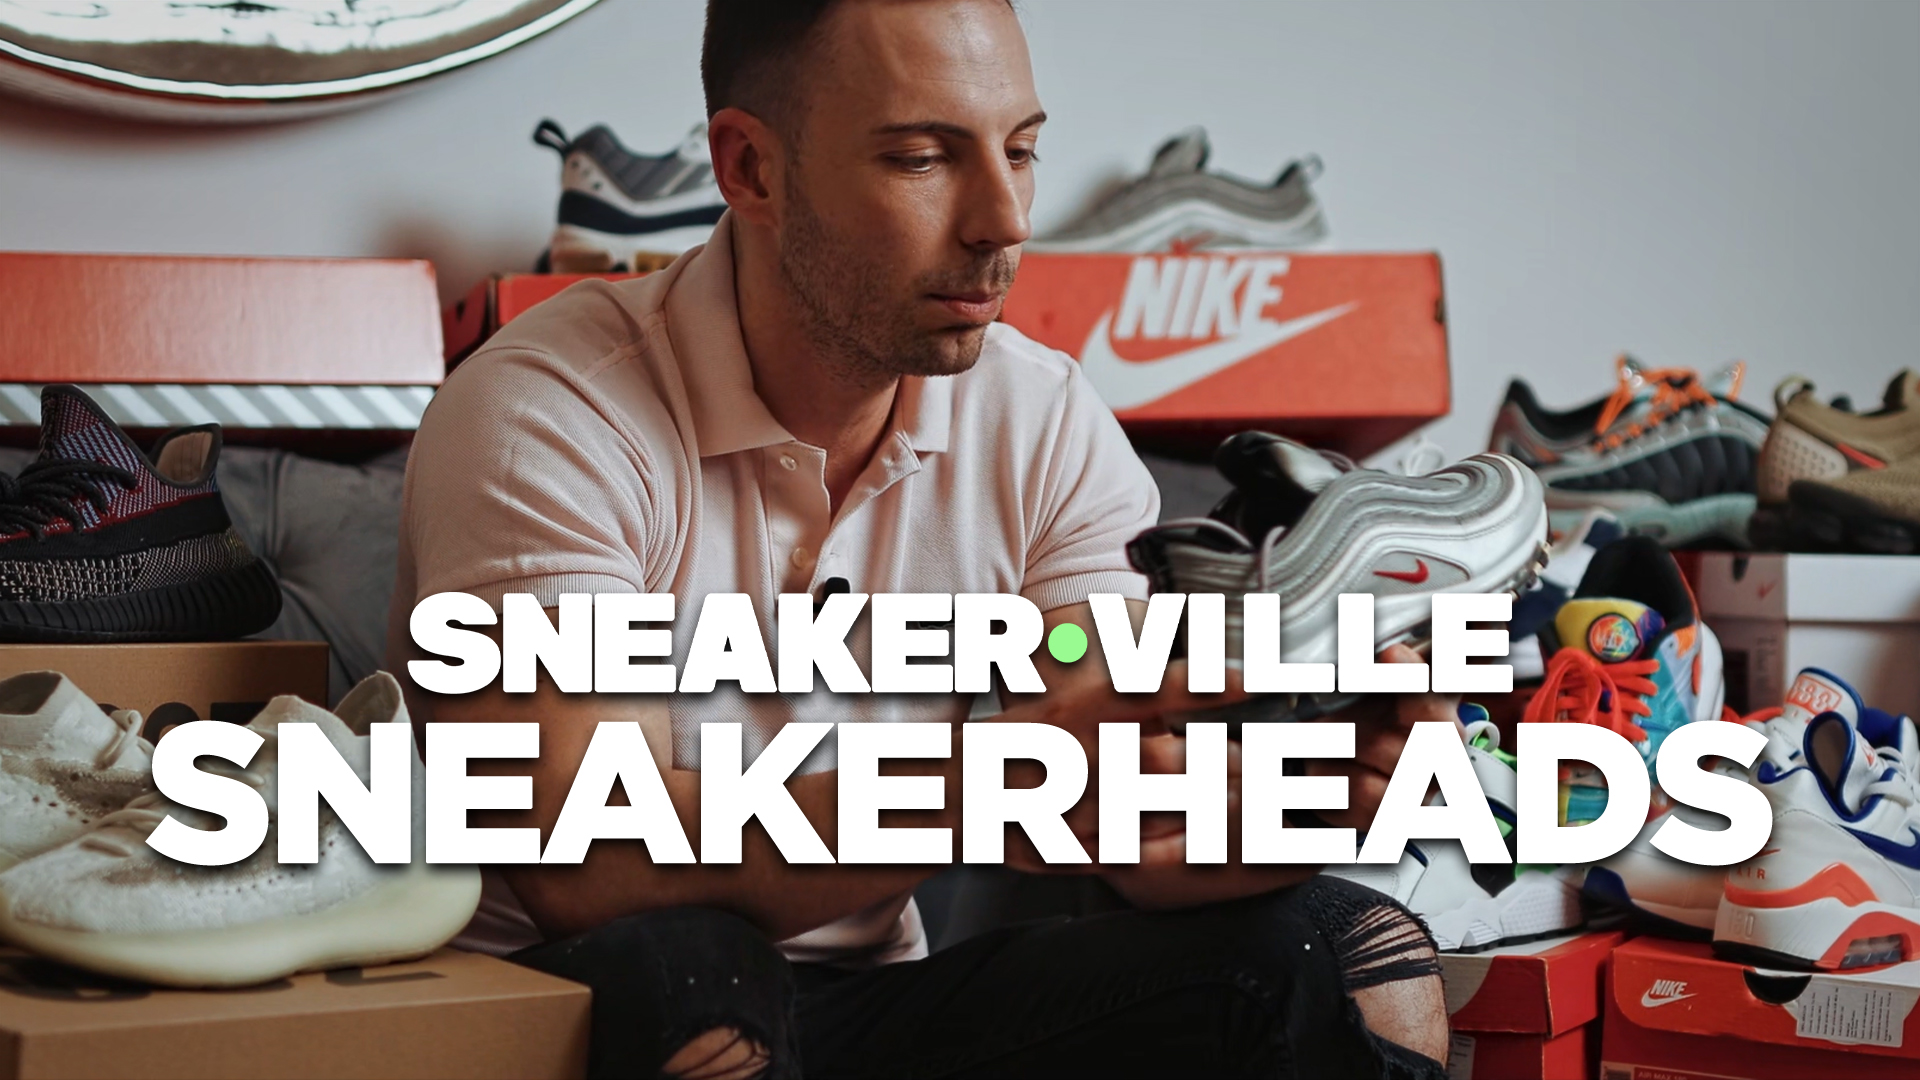 Sneakerville Sneakerheads – Njegoš